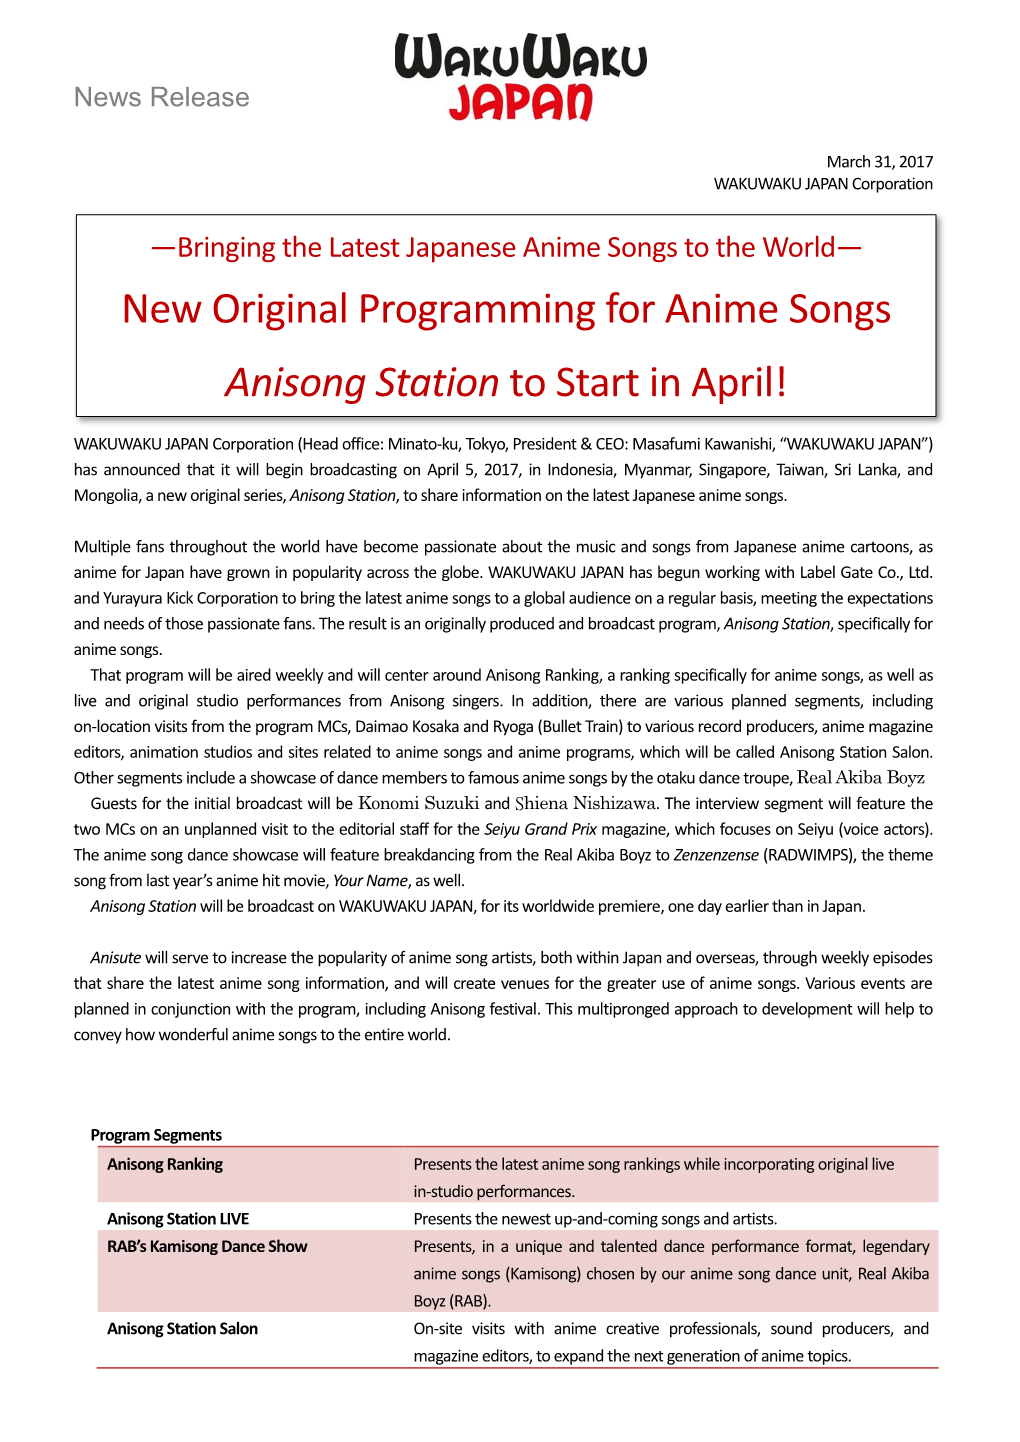 New Original Programming for Anime Songs Anisong Station to Start In